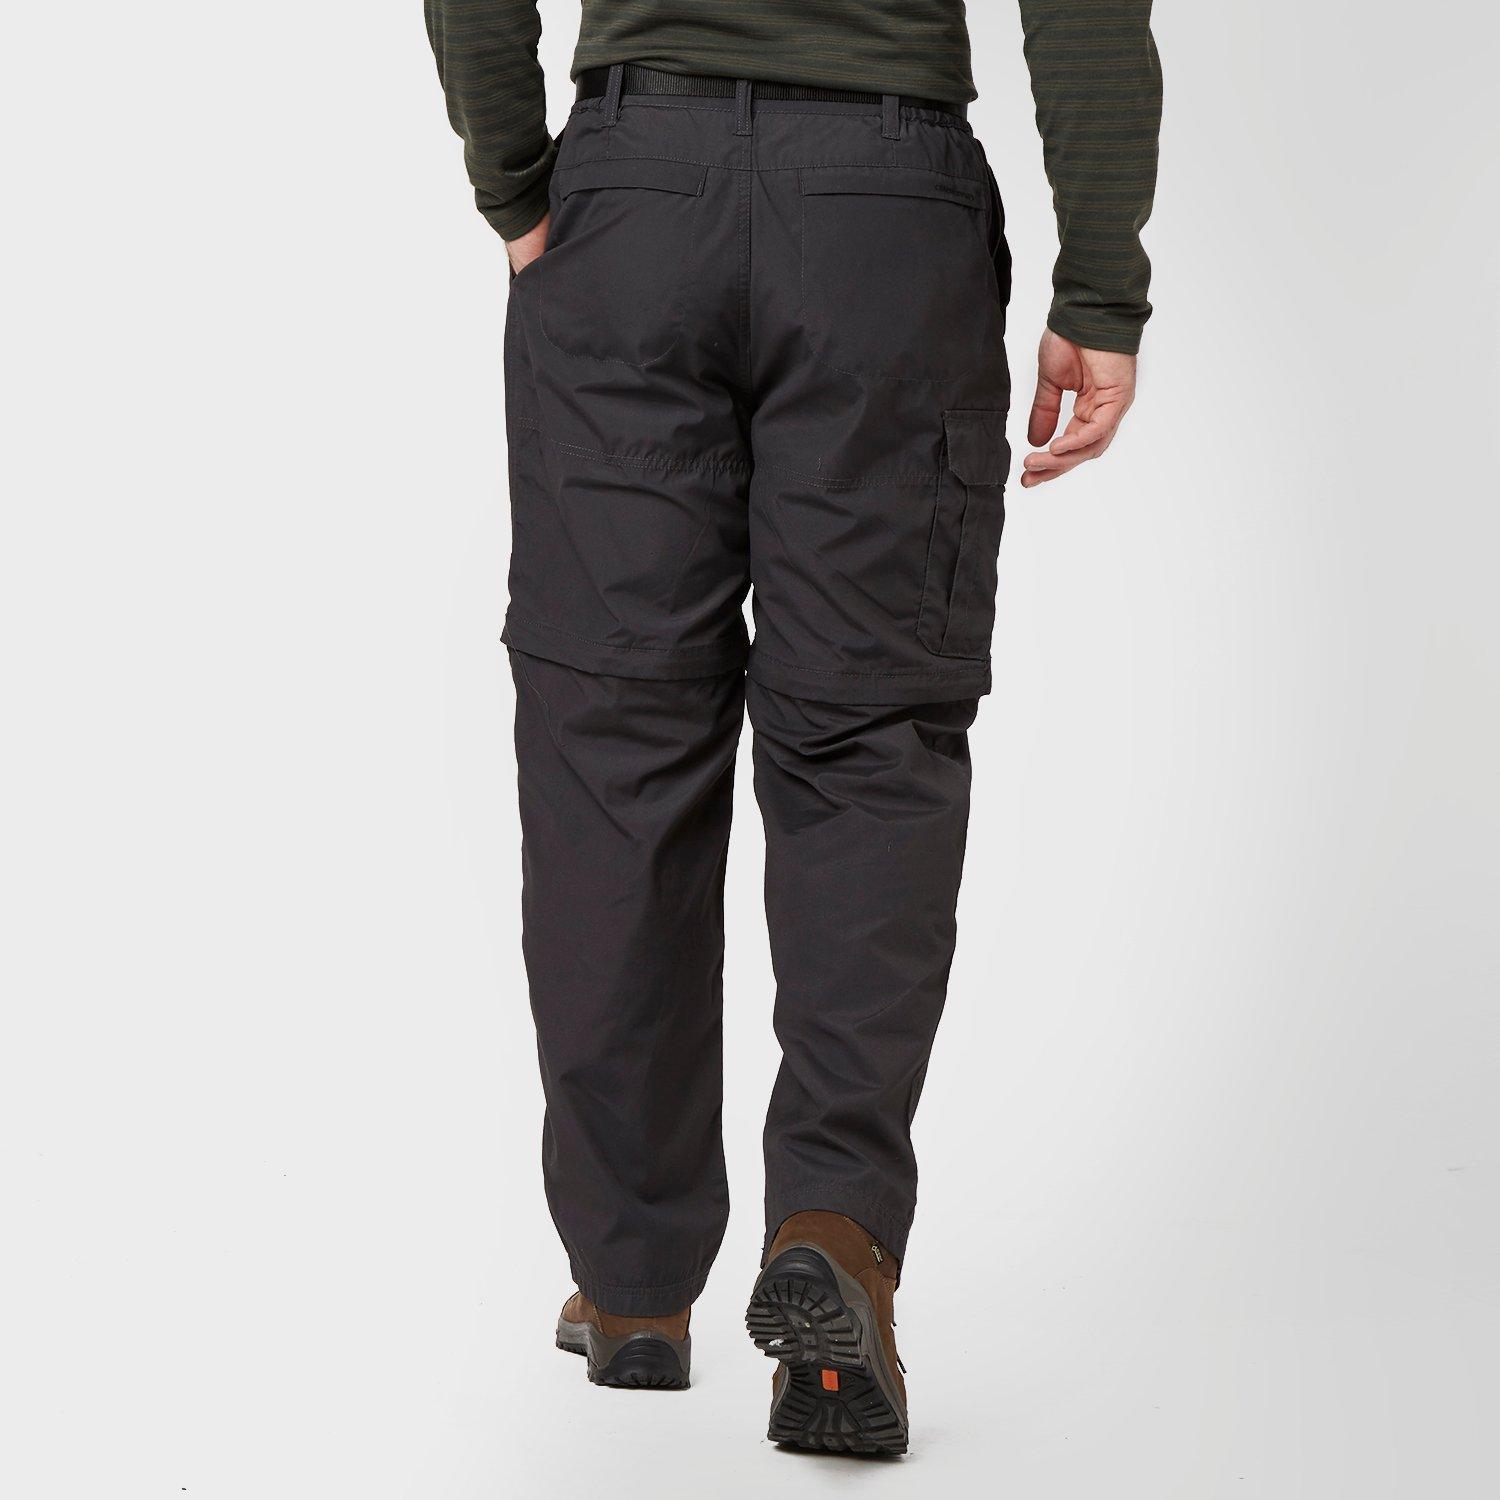 Craghoppers Men's Kiwi Convertible Trousers Review